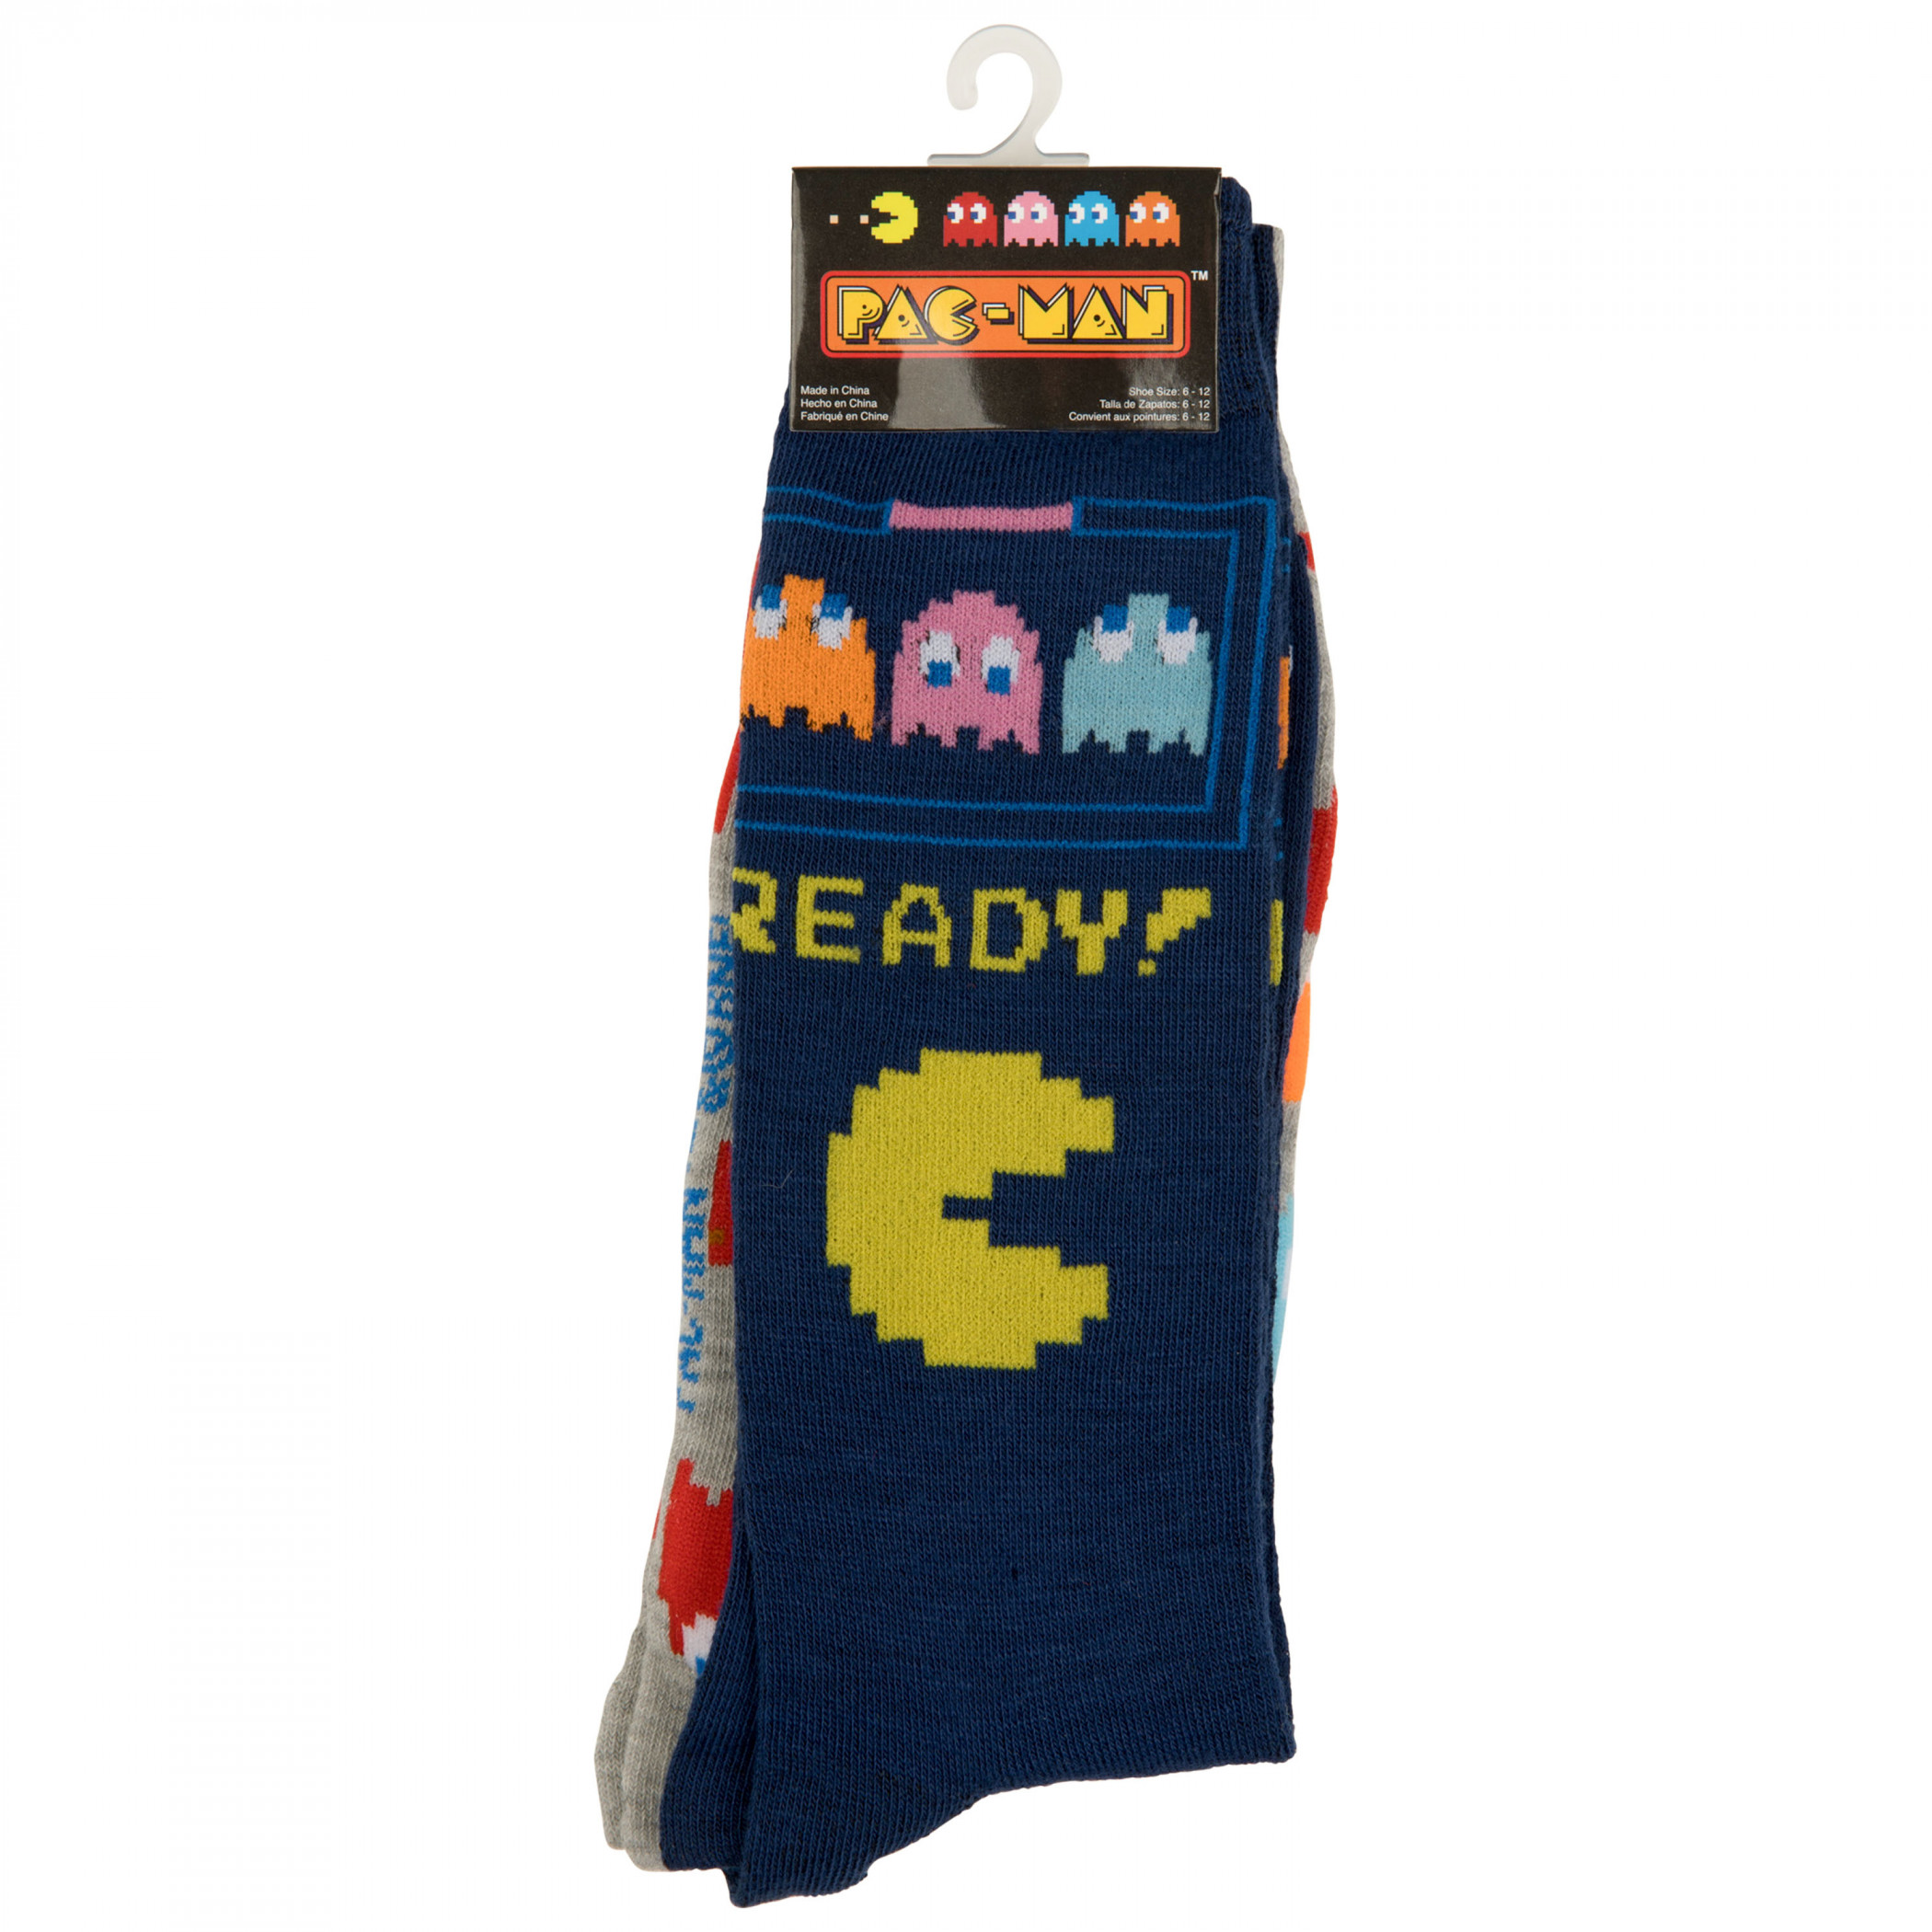 Pac-Man Ready! 2-Pair Pack of Casual Crew Socks